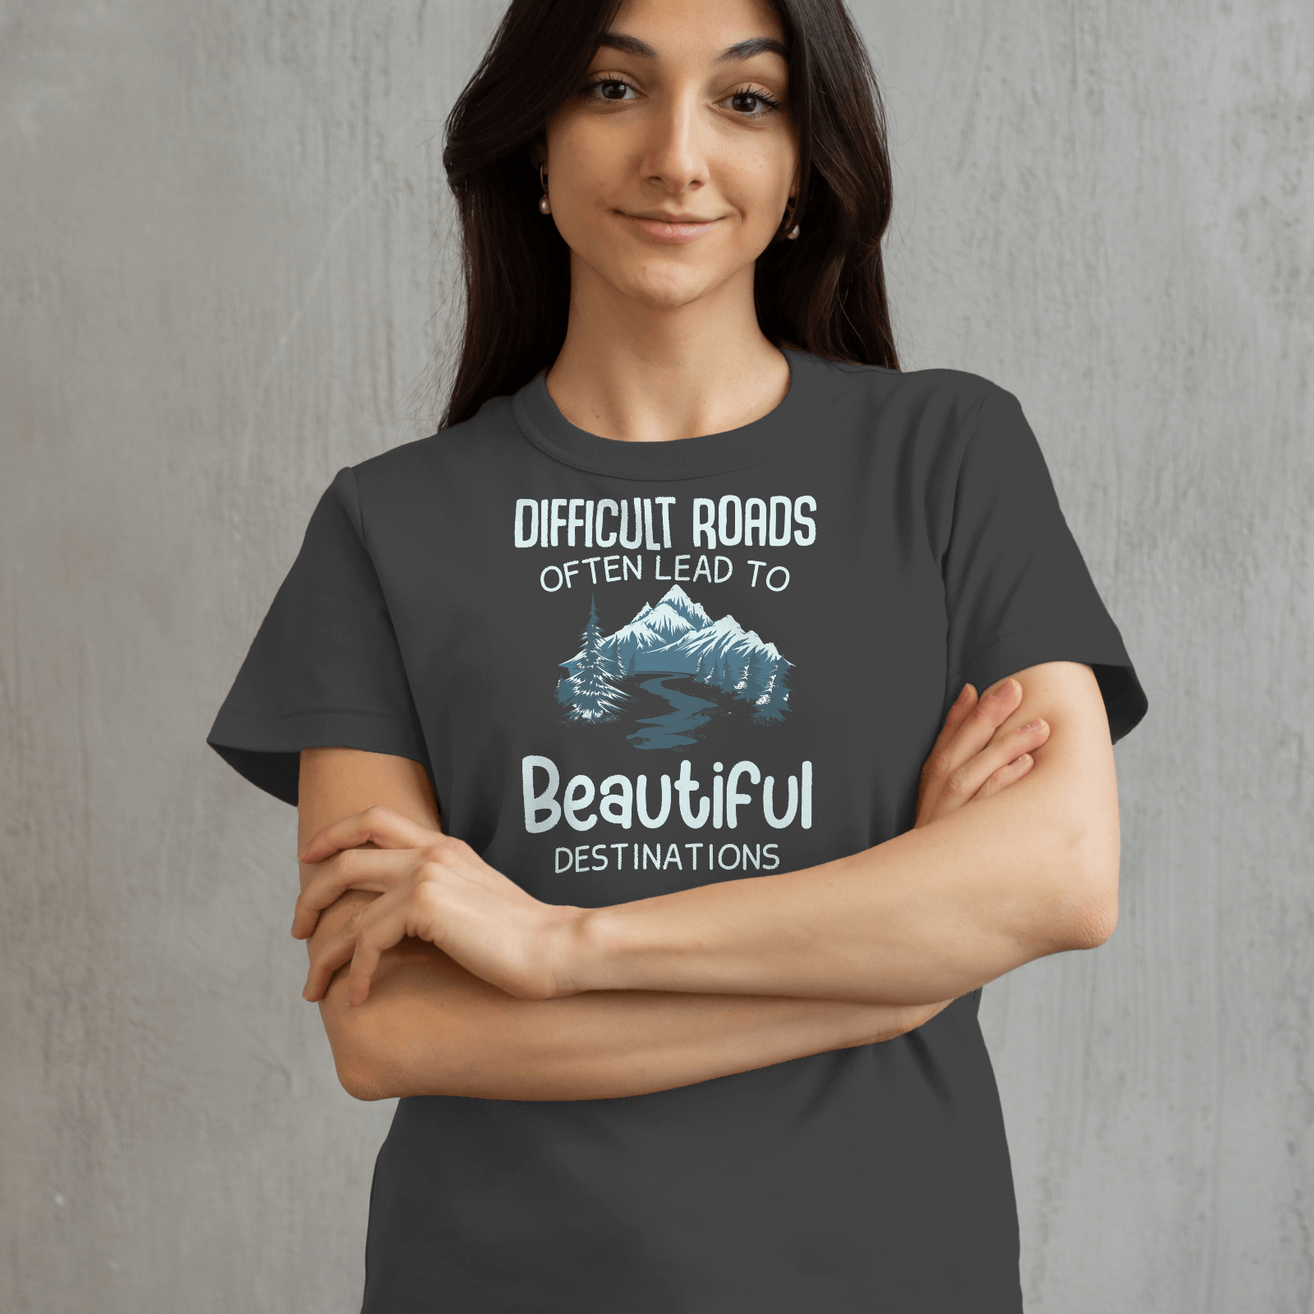 Difficult Roads Often Lead to Beautiful Destinations - Women's Inspirational T-Shirt